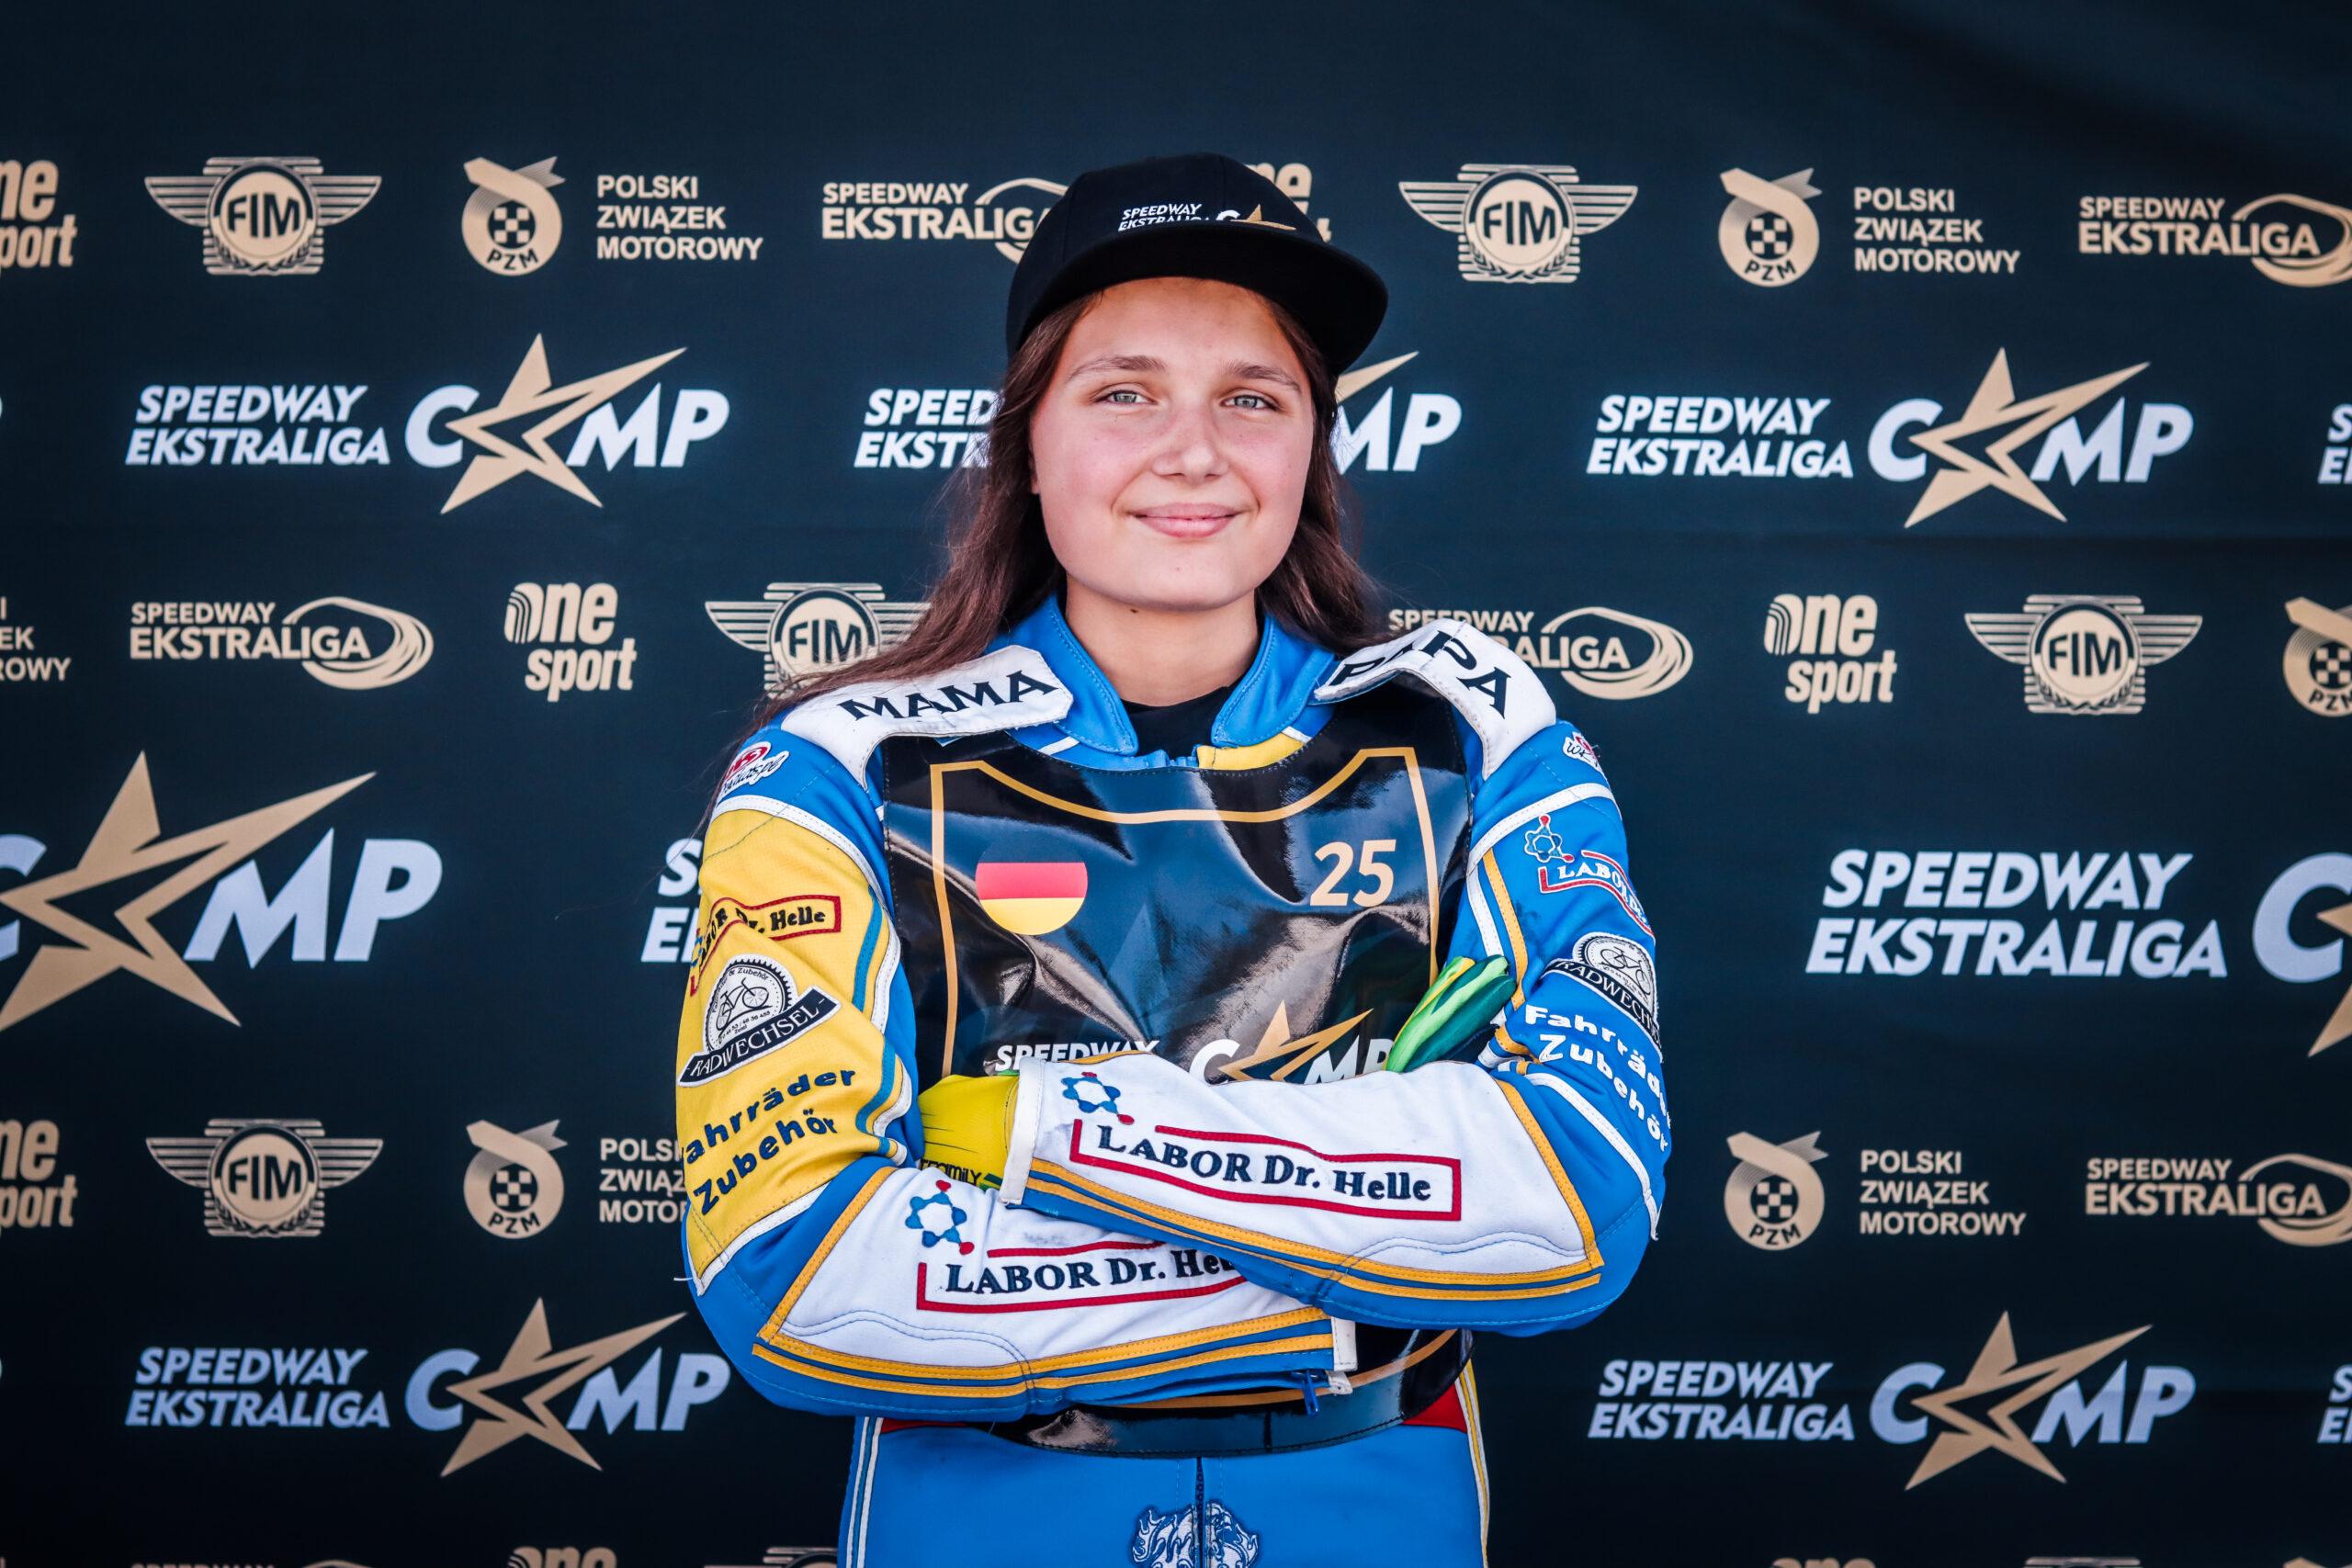 Ann-Kathrin Gerdes największy progres na Speedway Ekstraliga Camp